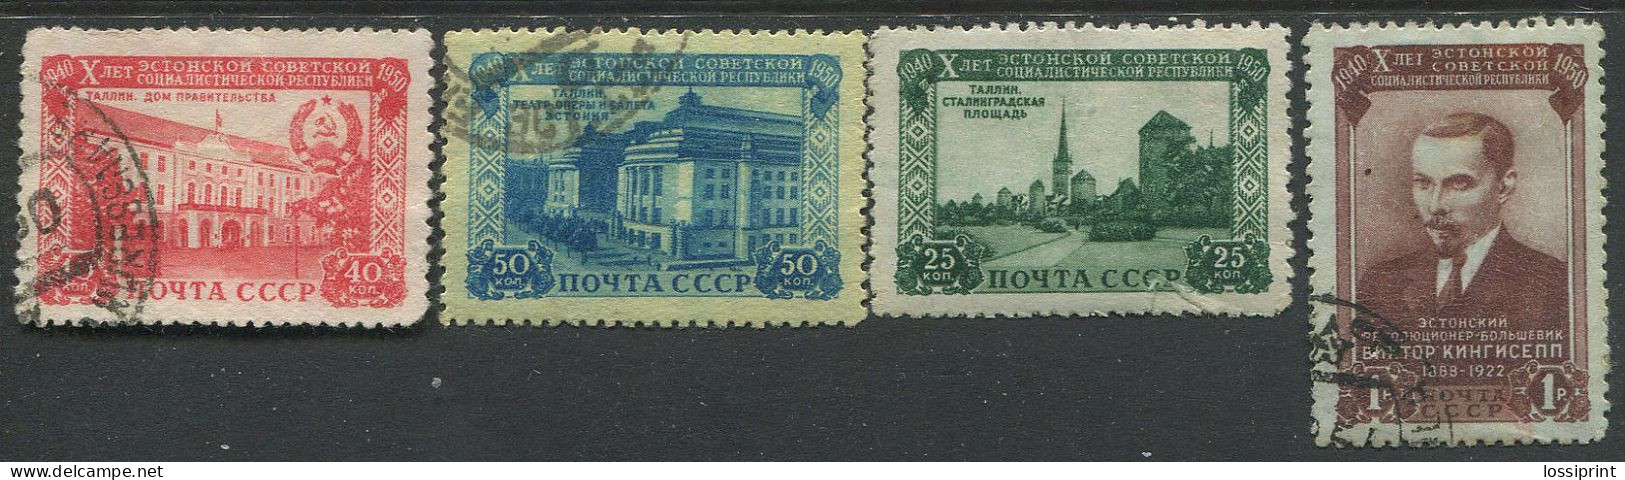 Russia:Estonia:Used Stamps Serie X Years Estonia, V.Kingissepp, Theatre, Street, 1950 - Gebraucht